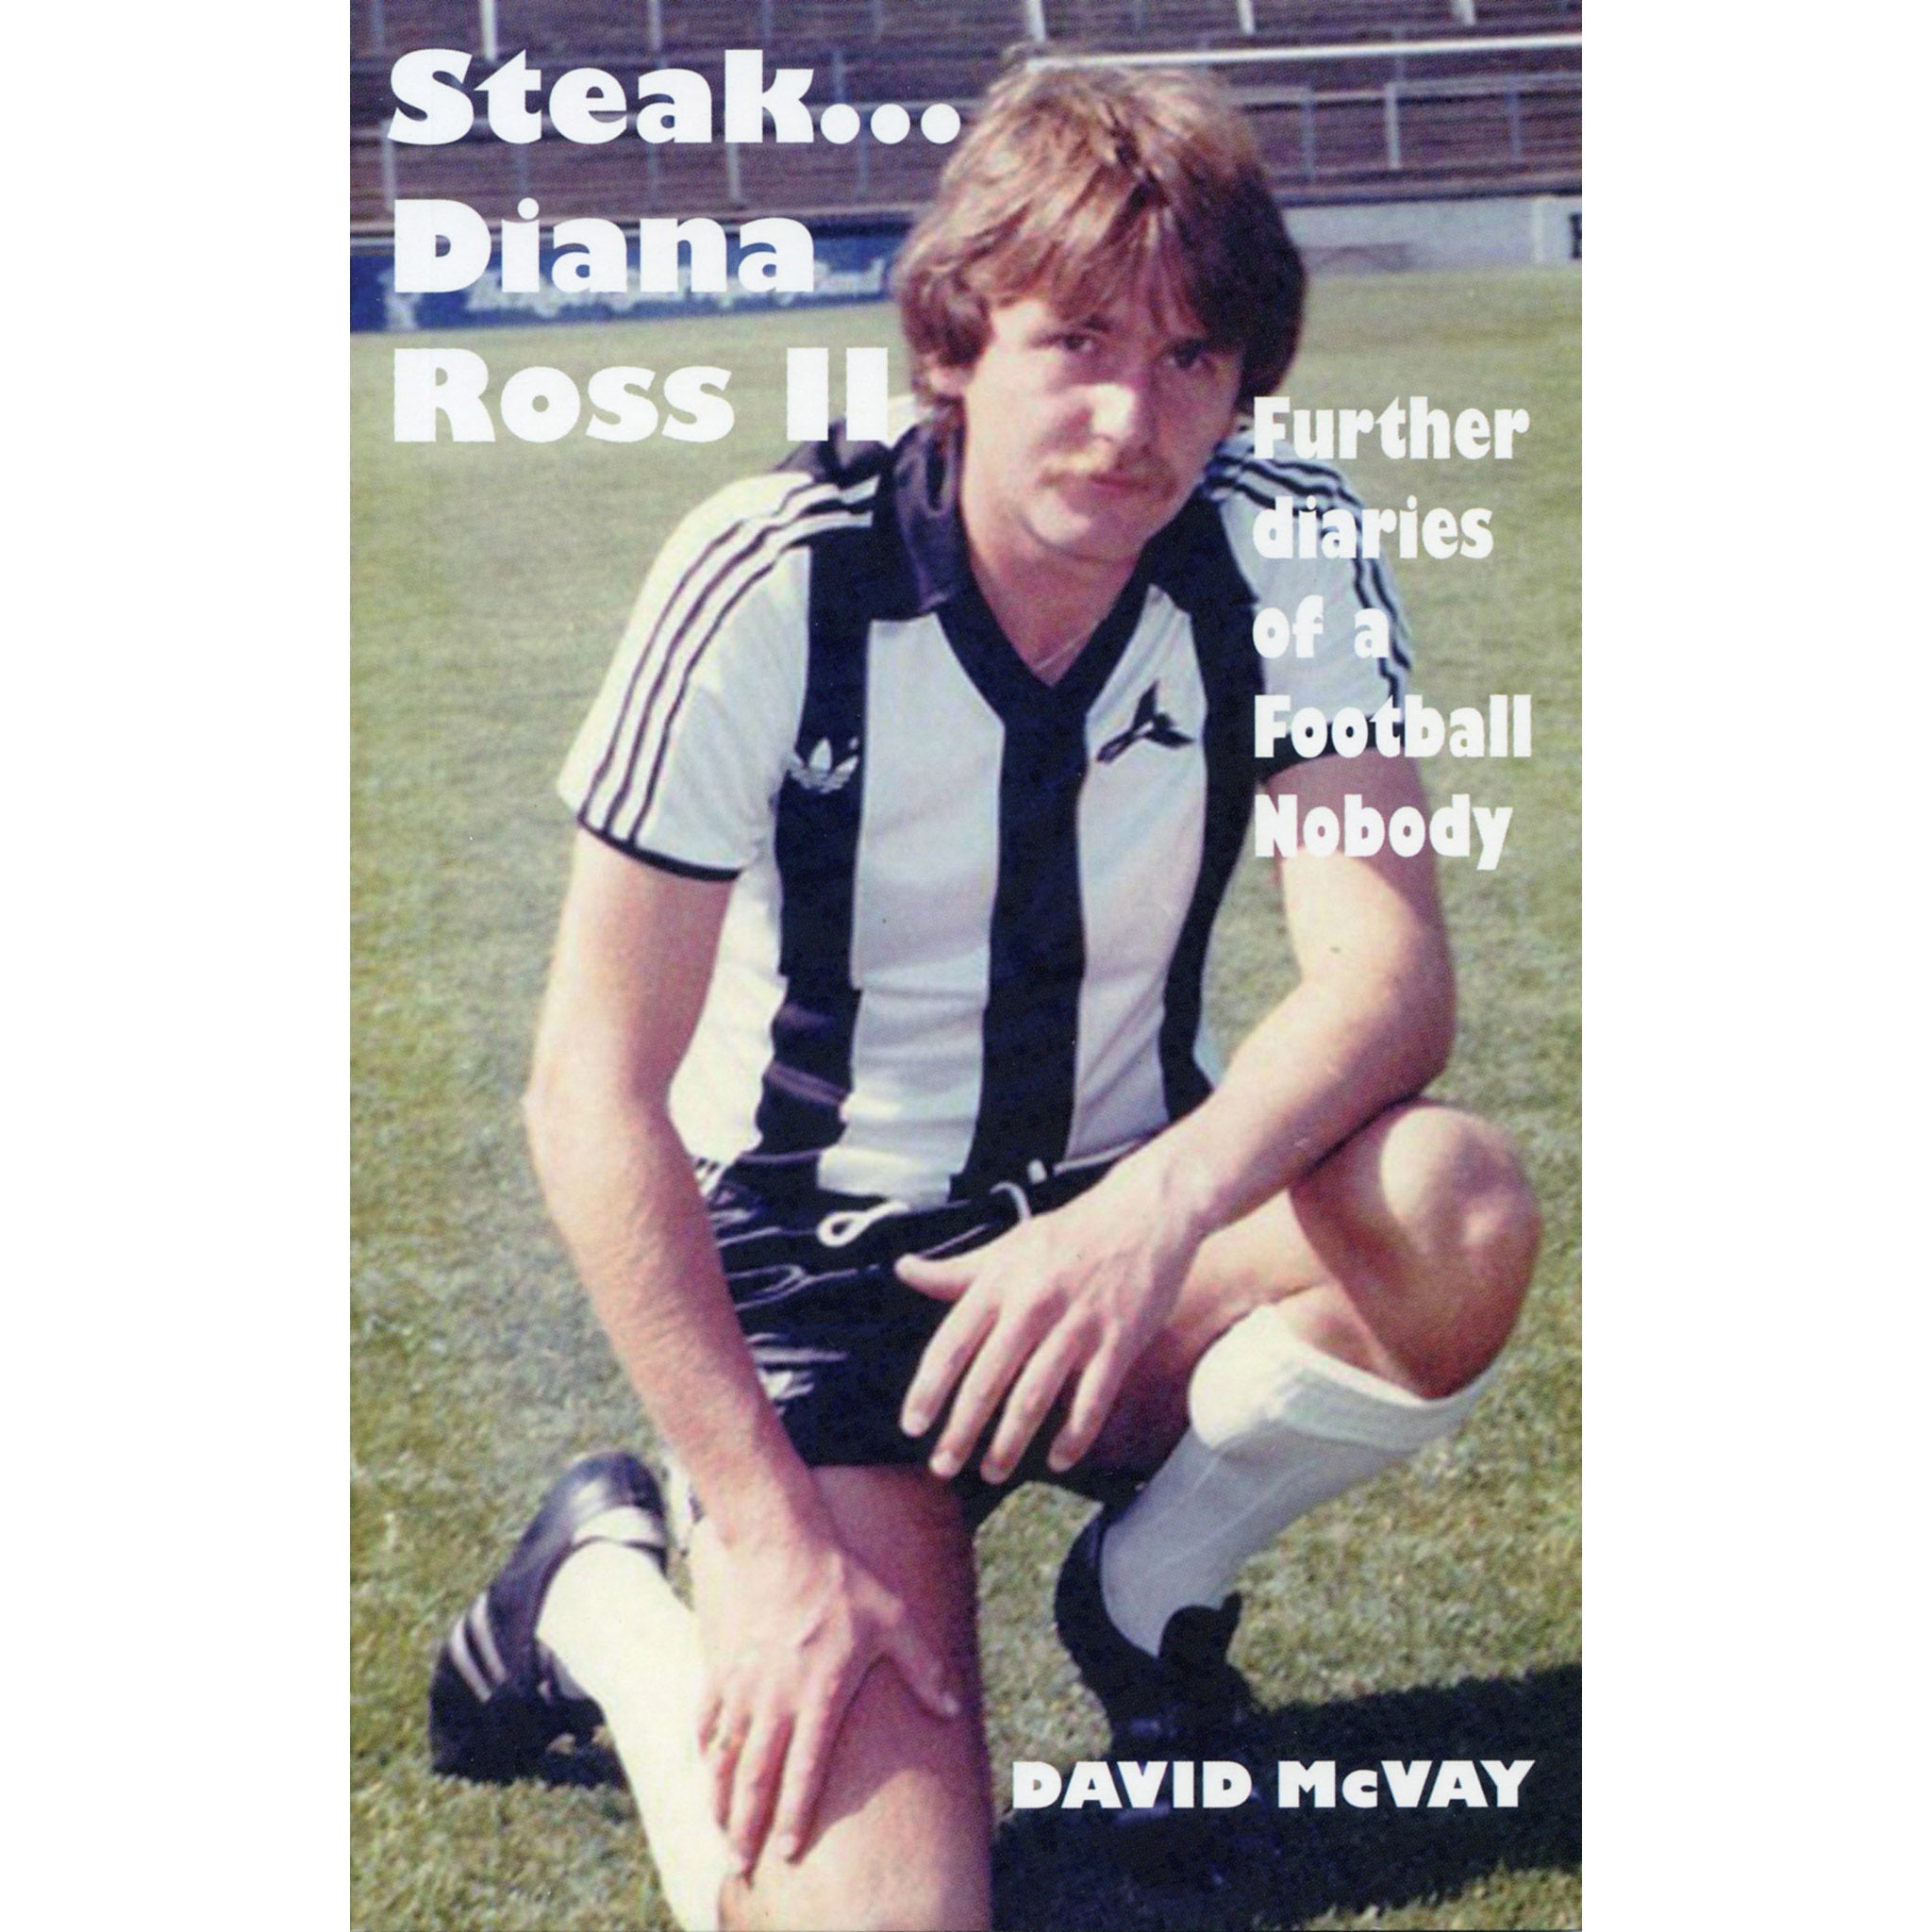 Steak… Diana Ross II – Further diaries of a Football Nobody